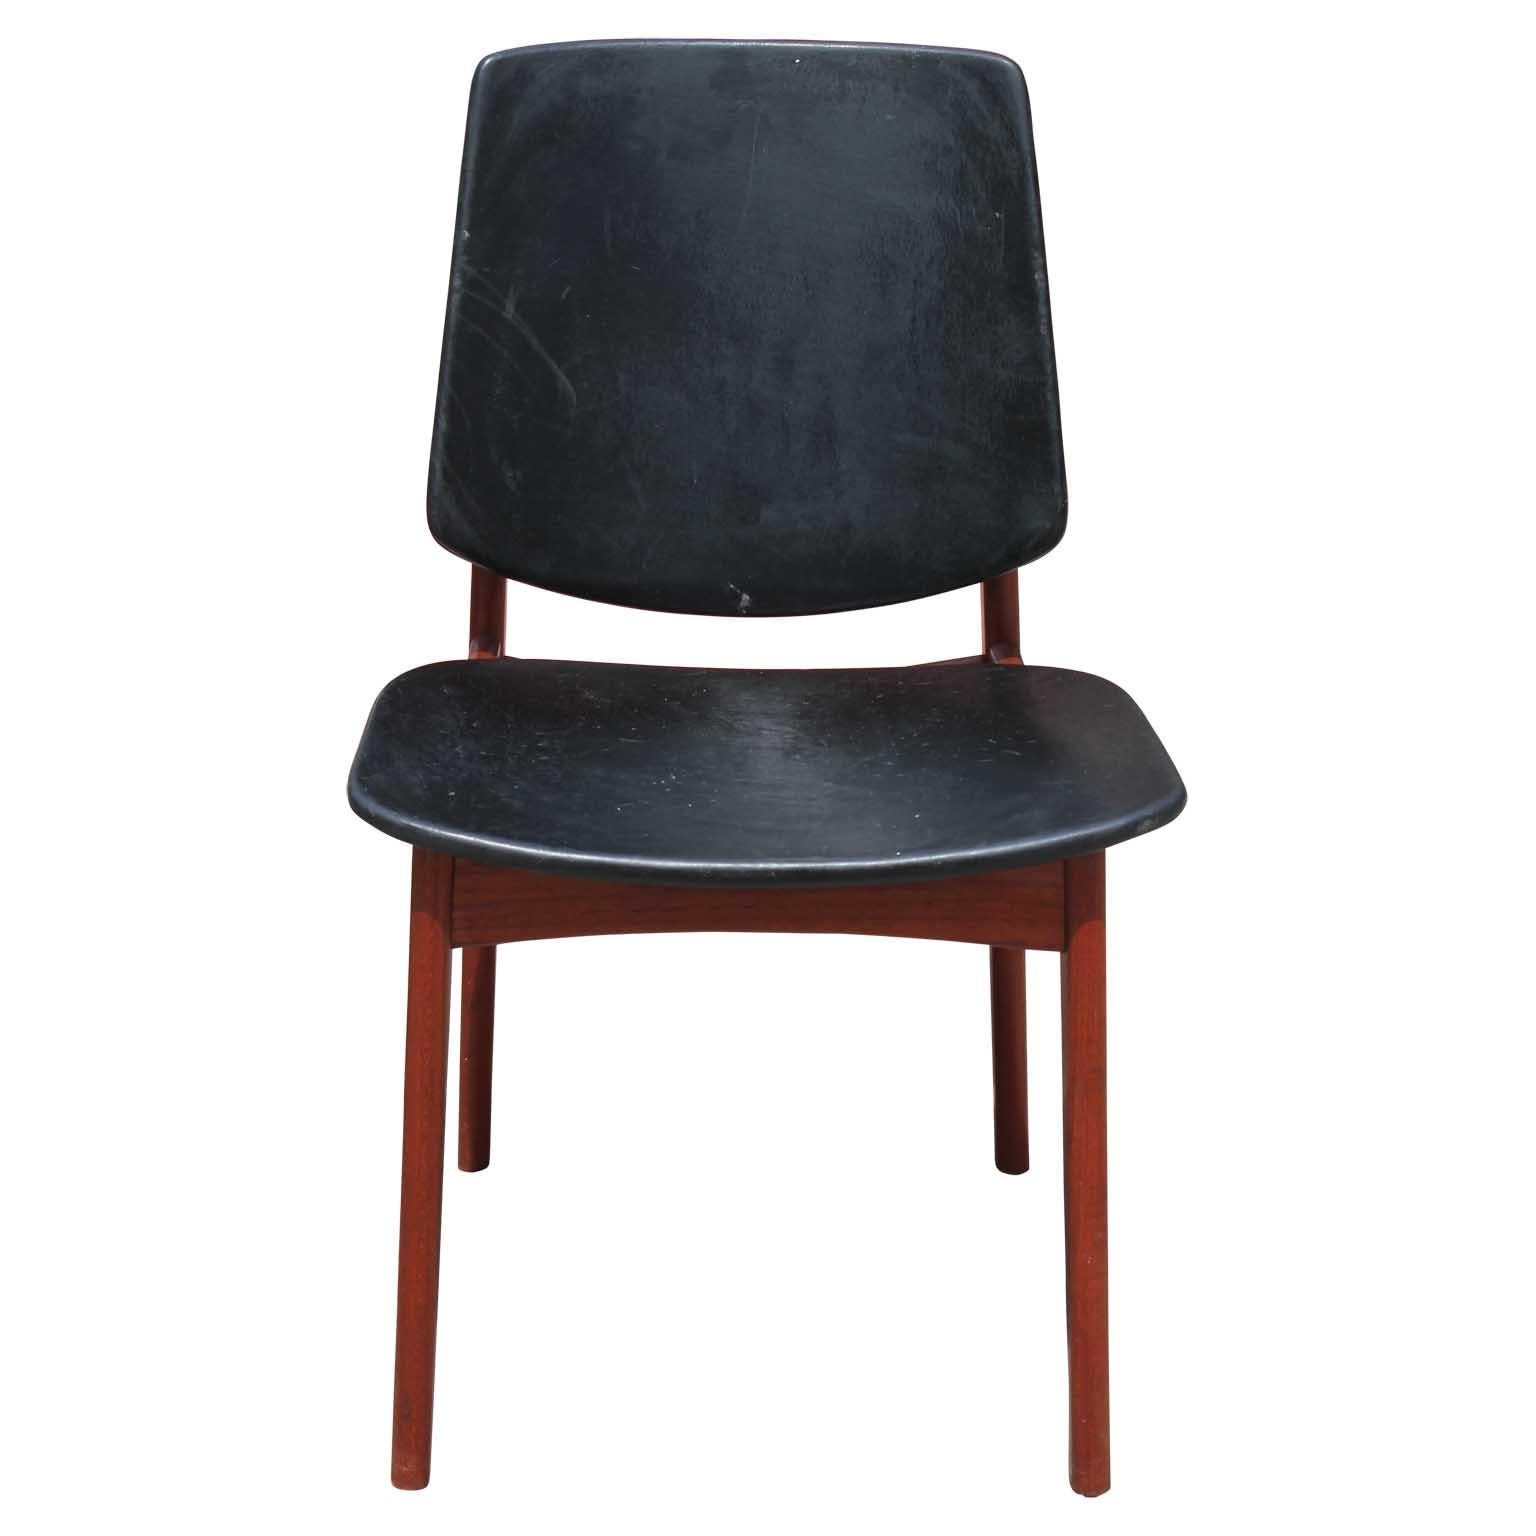 Mid-20th Century Set of Six Danish Teak and Leather or Lambskin Arne Hovmand-Olsen Dining Chairs